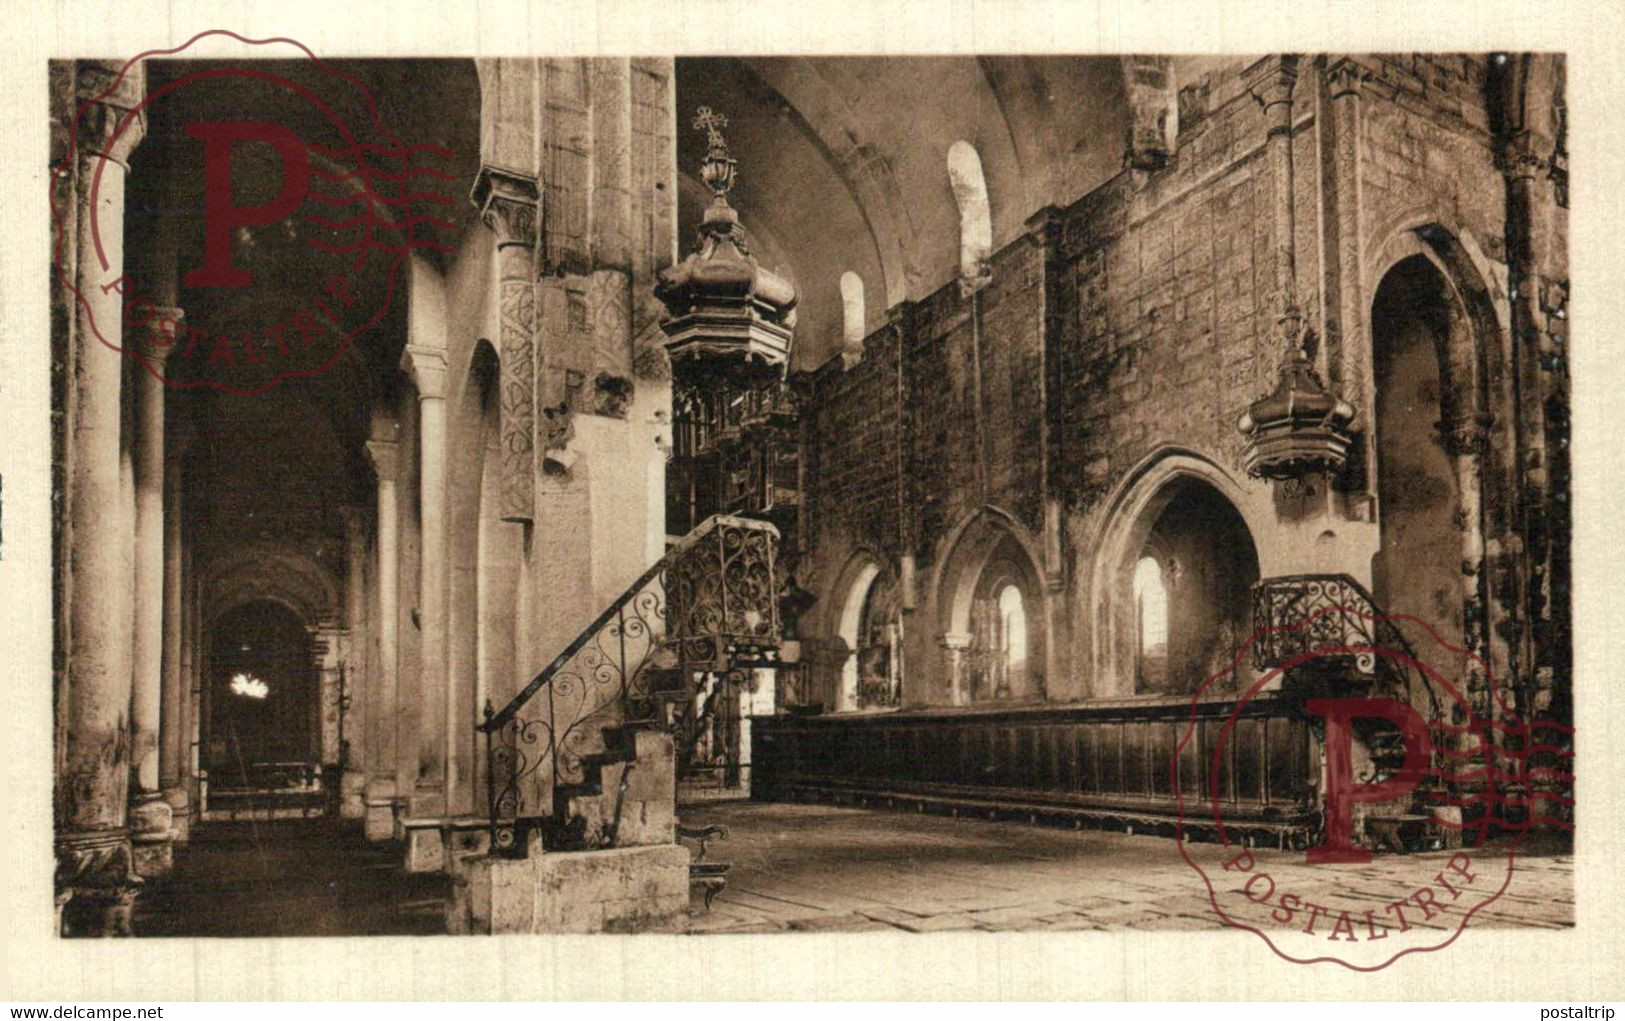 GALICIA. Libro con 20 postales del Monasterio de OSERA (Orense) (Ed.Roisin n.1)